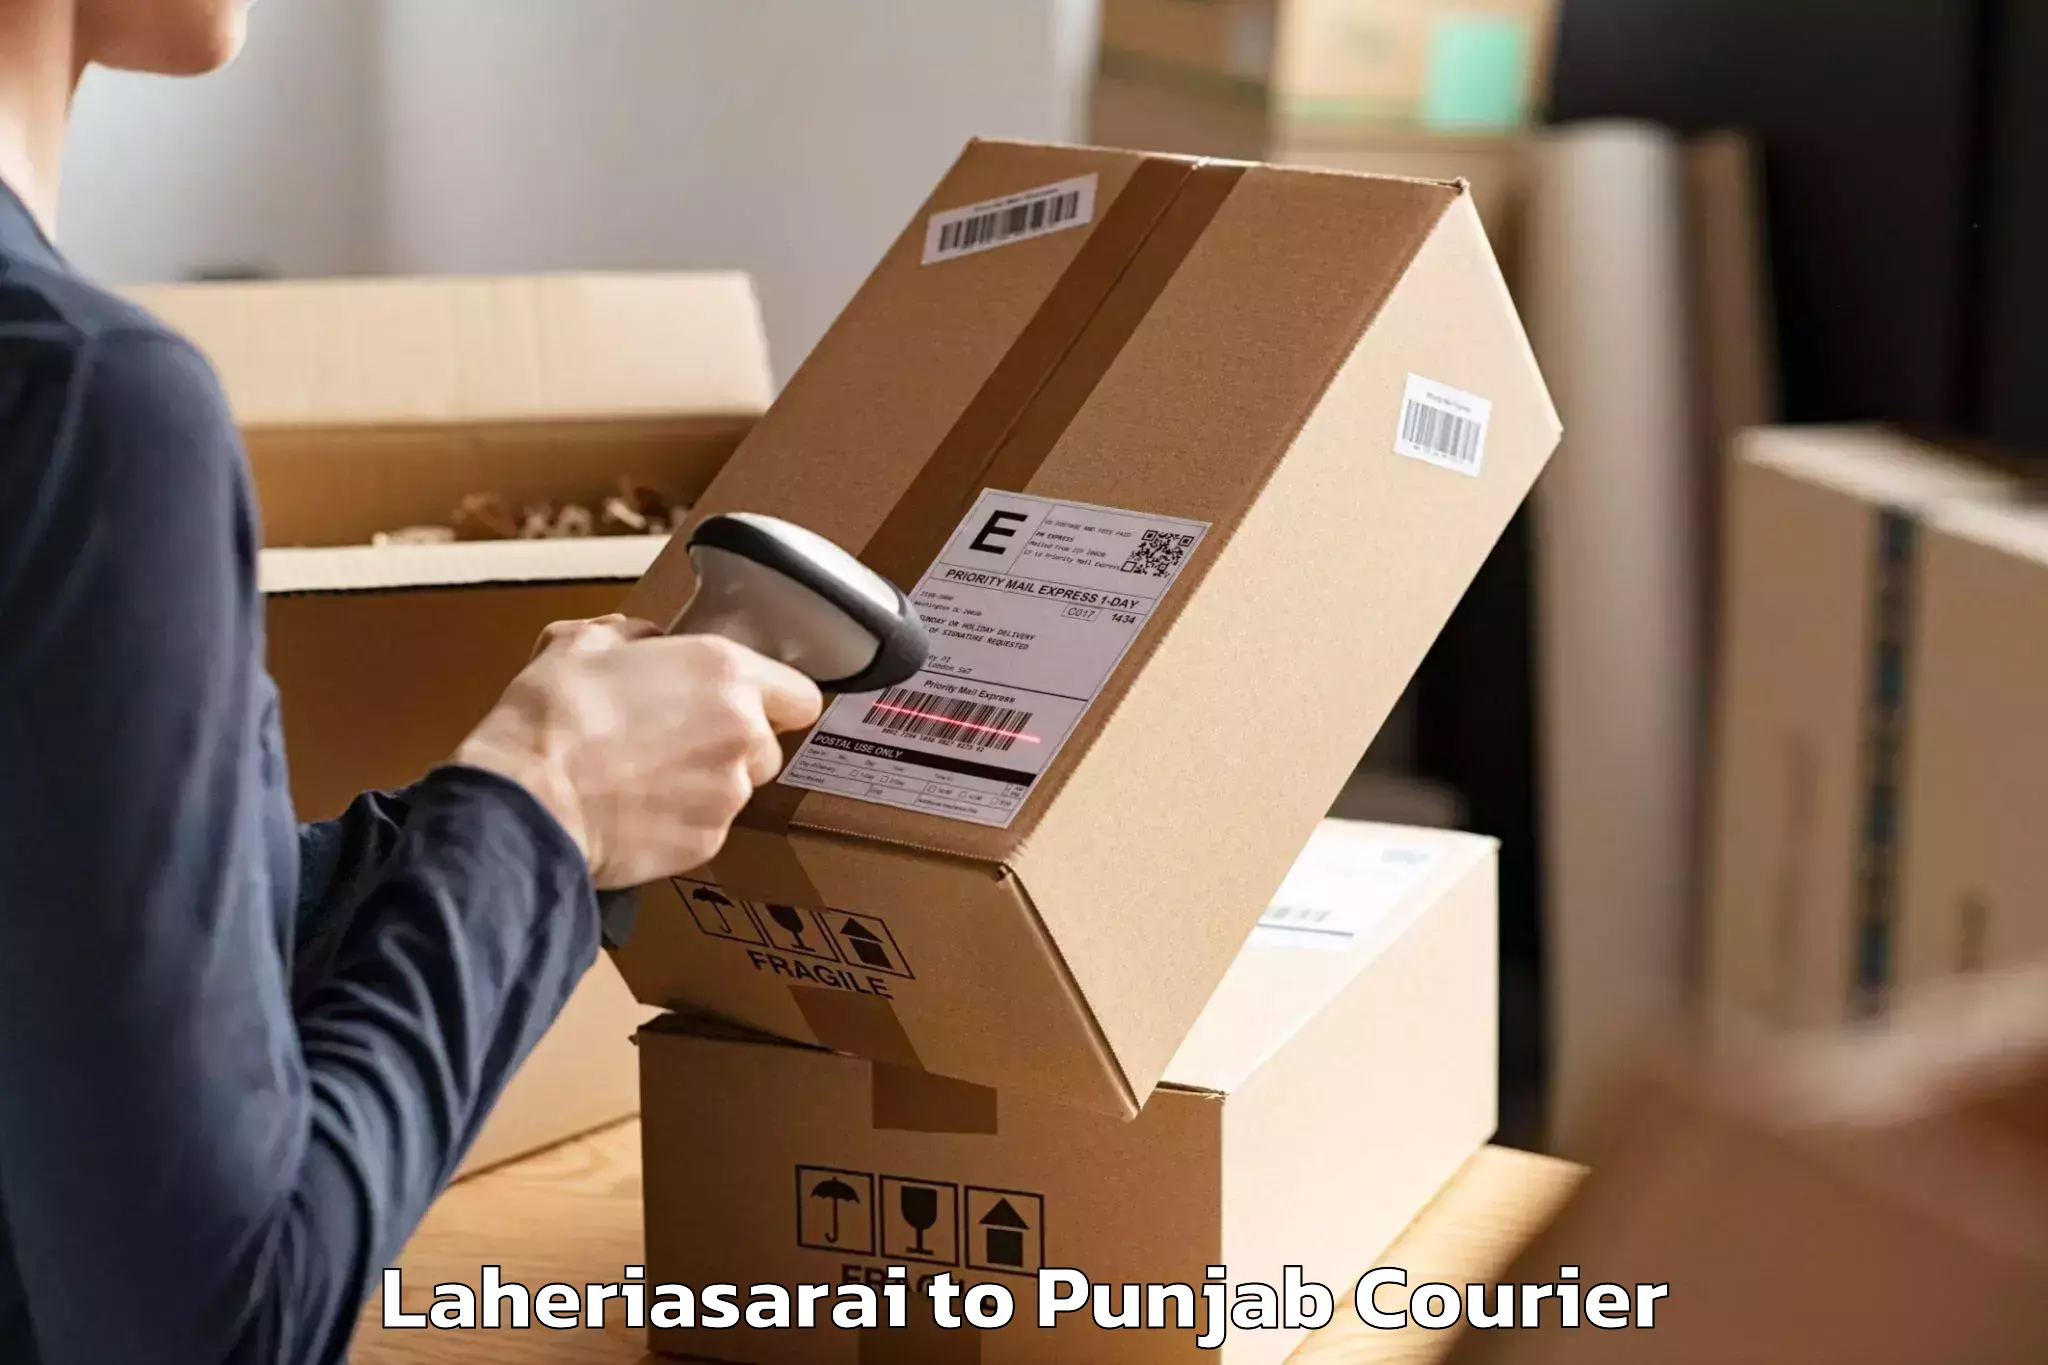 Efficient moving company Laheriasarai to Punjab